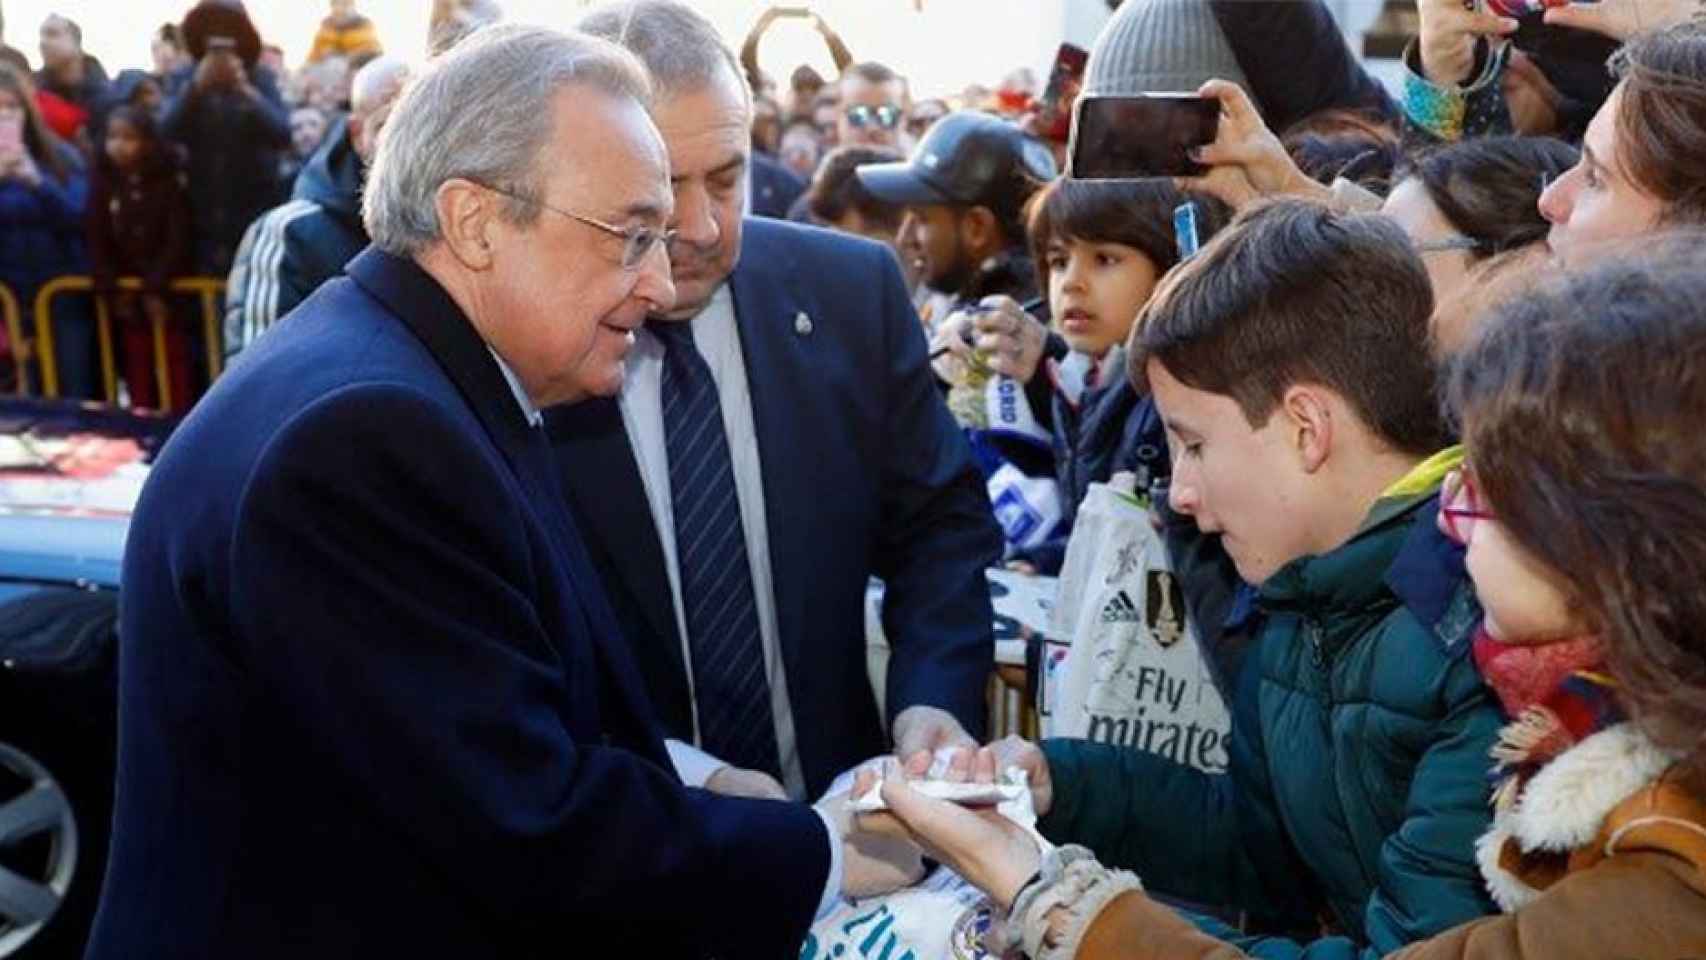 El presidente del Real madrid, Florentino Pérez, firma autógrafos / REALMADRID.COM